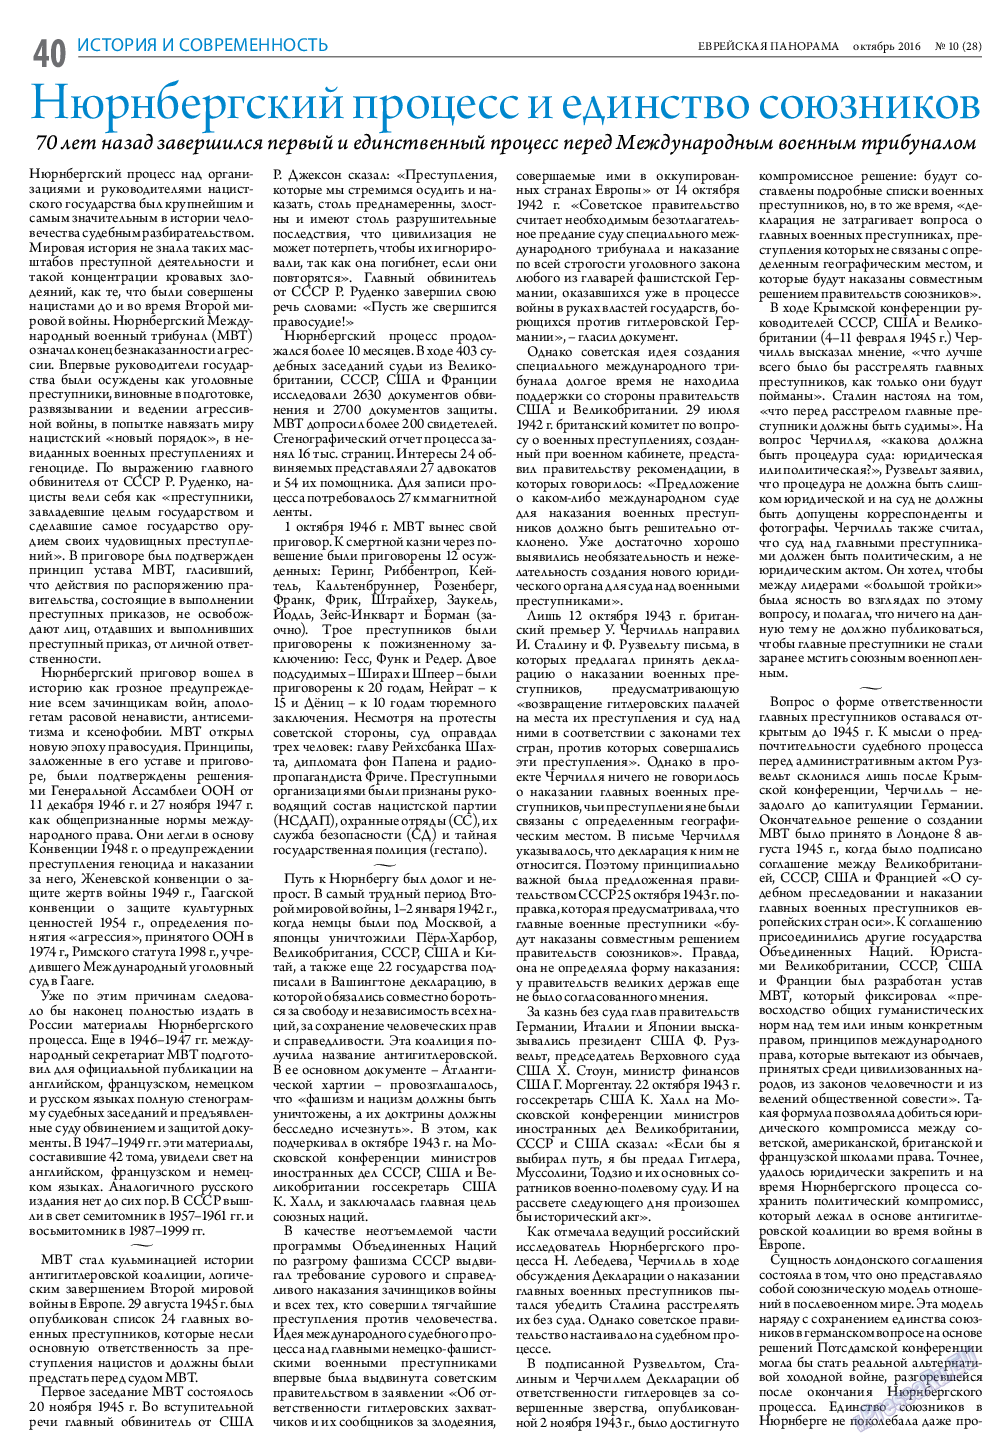 Еврейская панорама, газета. 2016 №10 стр.40